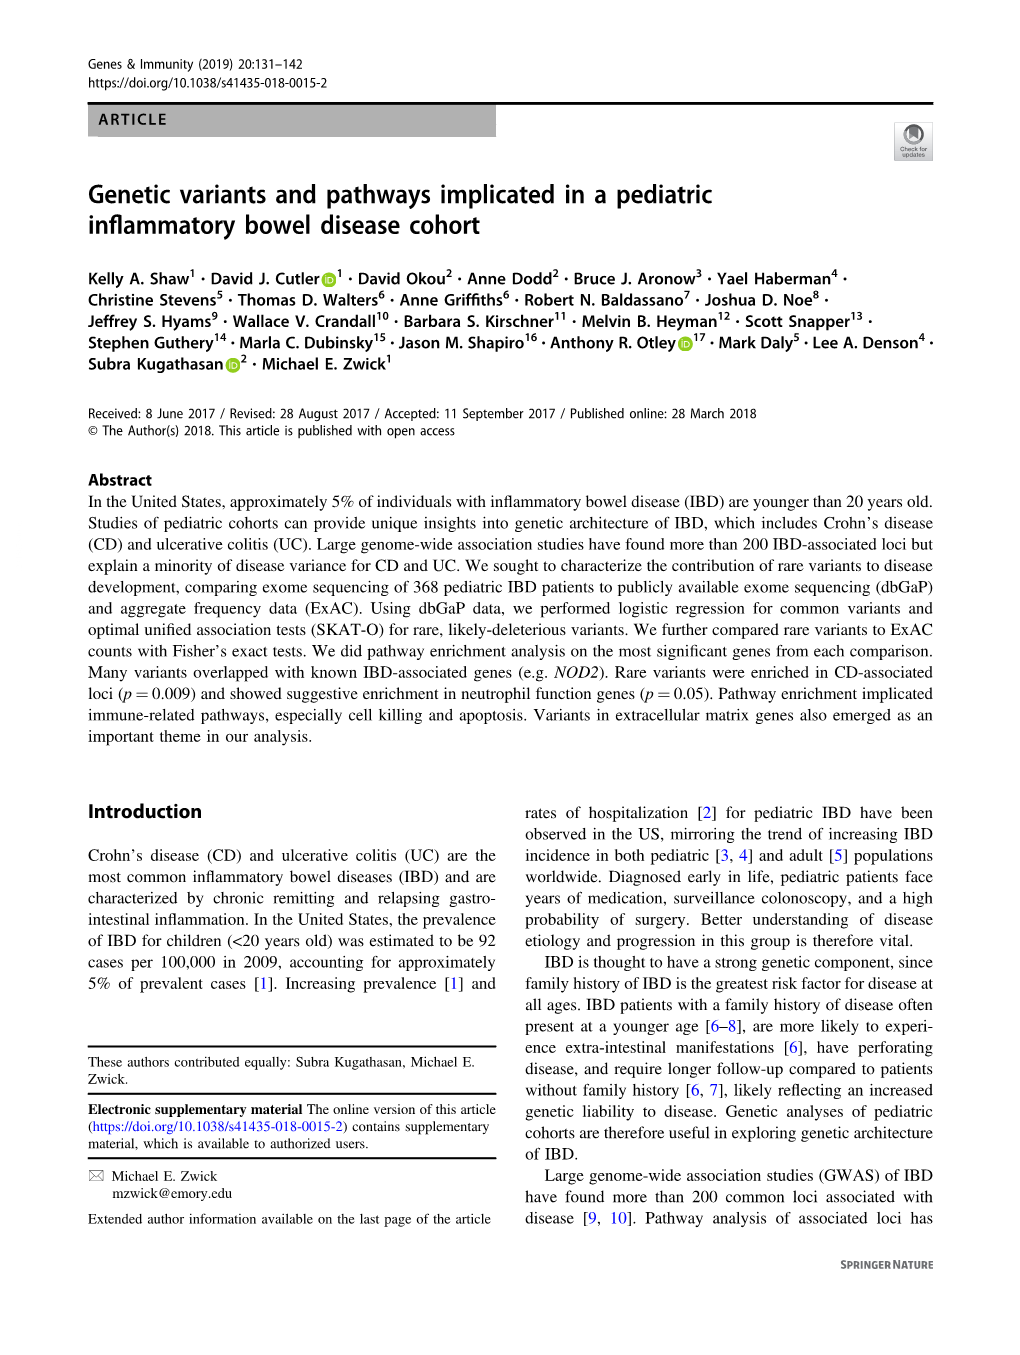 Genetic Variants and Pathways Implicated in a Pediatric Inﬂammatory Bowel Disease Cohort